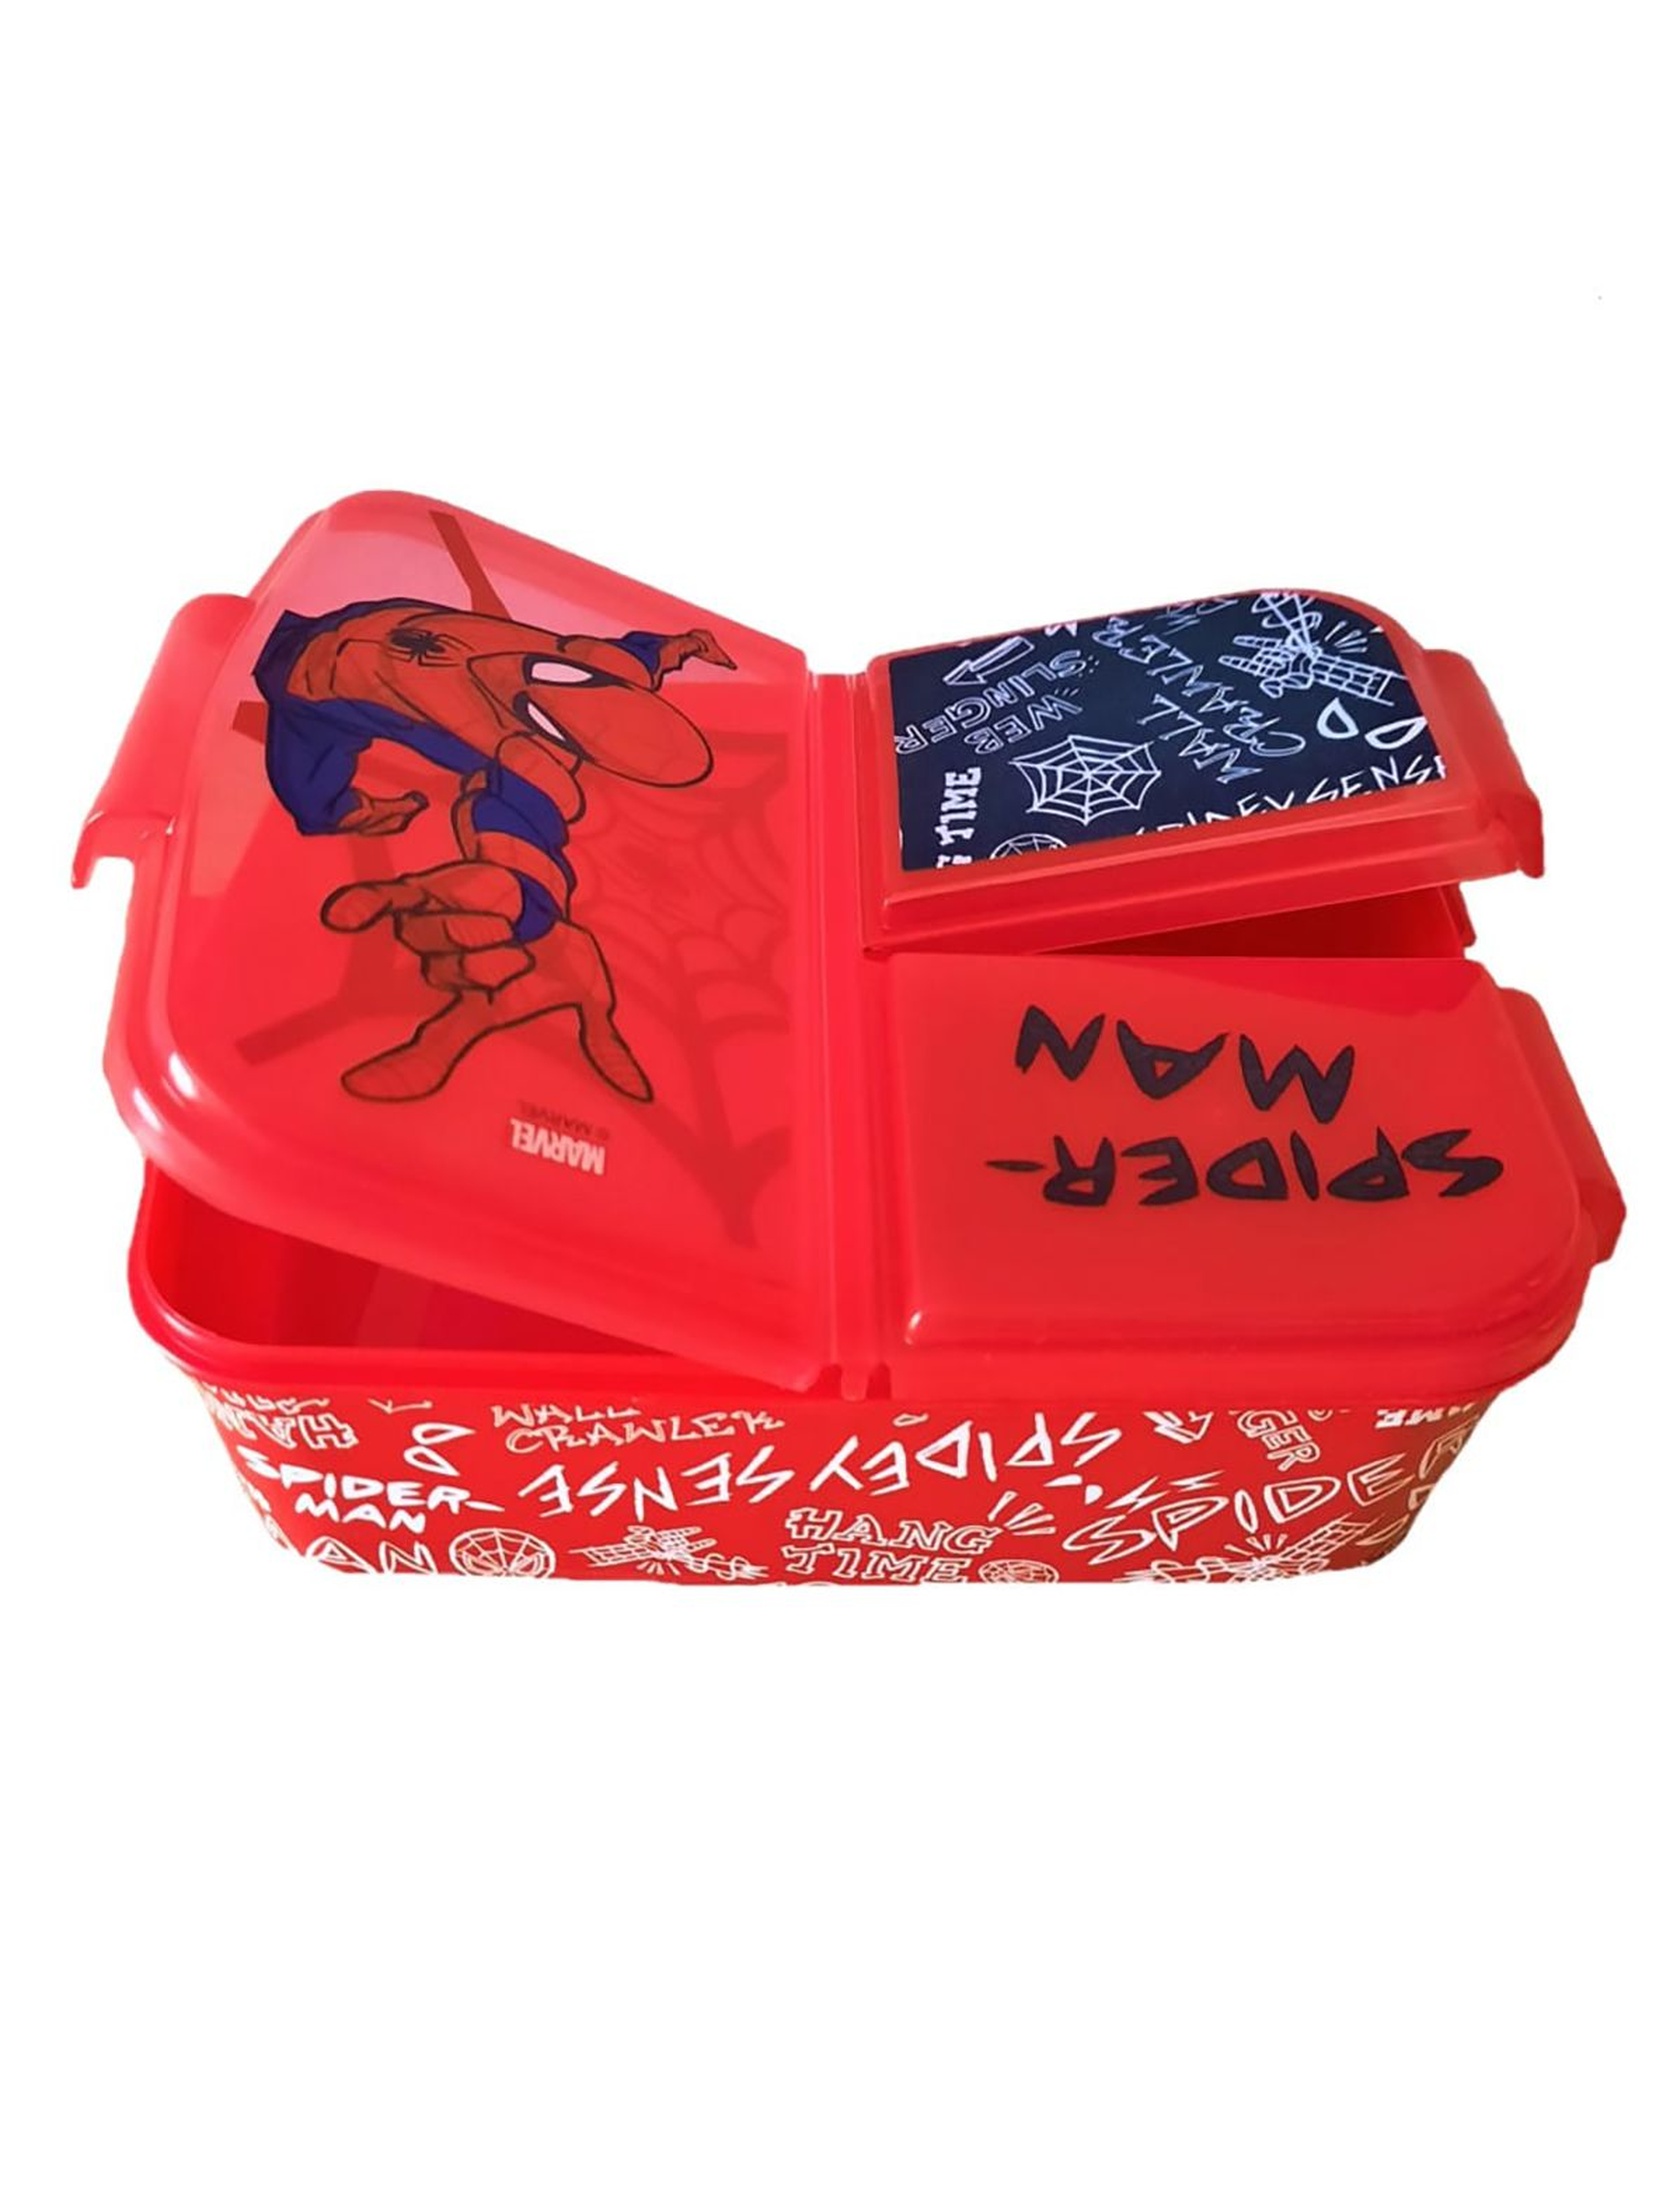 Pudełko śniadaniowe Spiderman